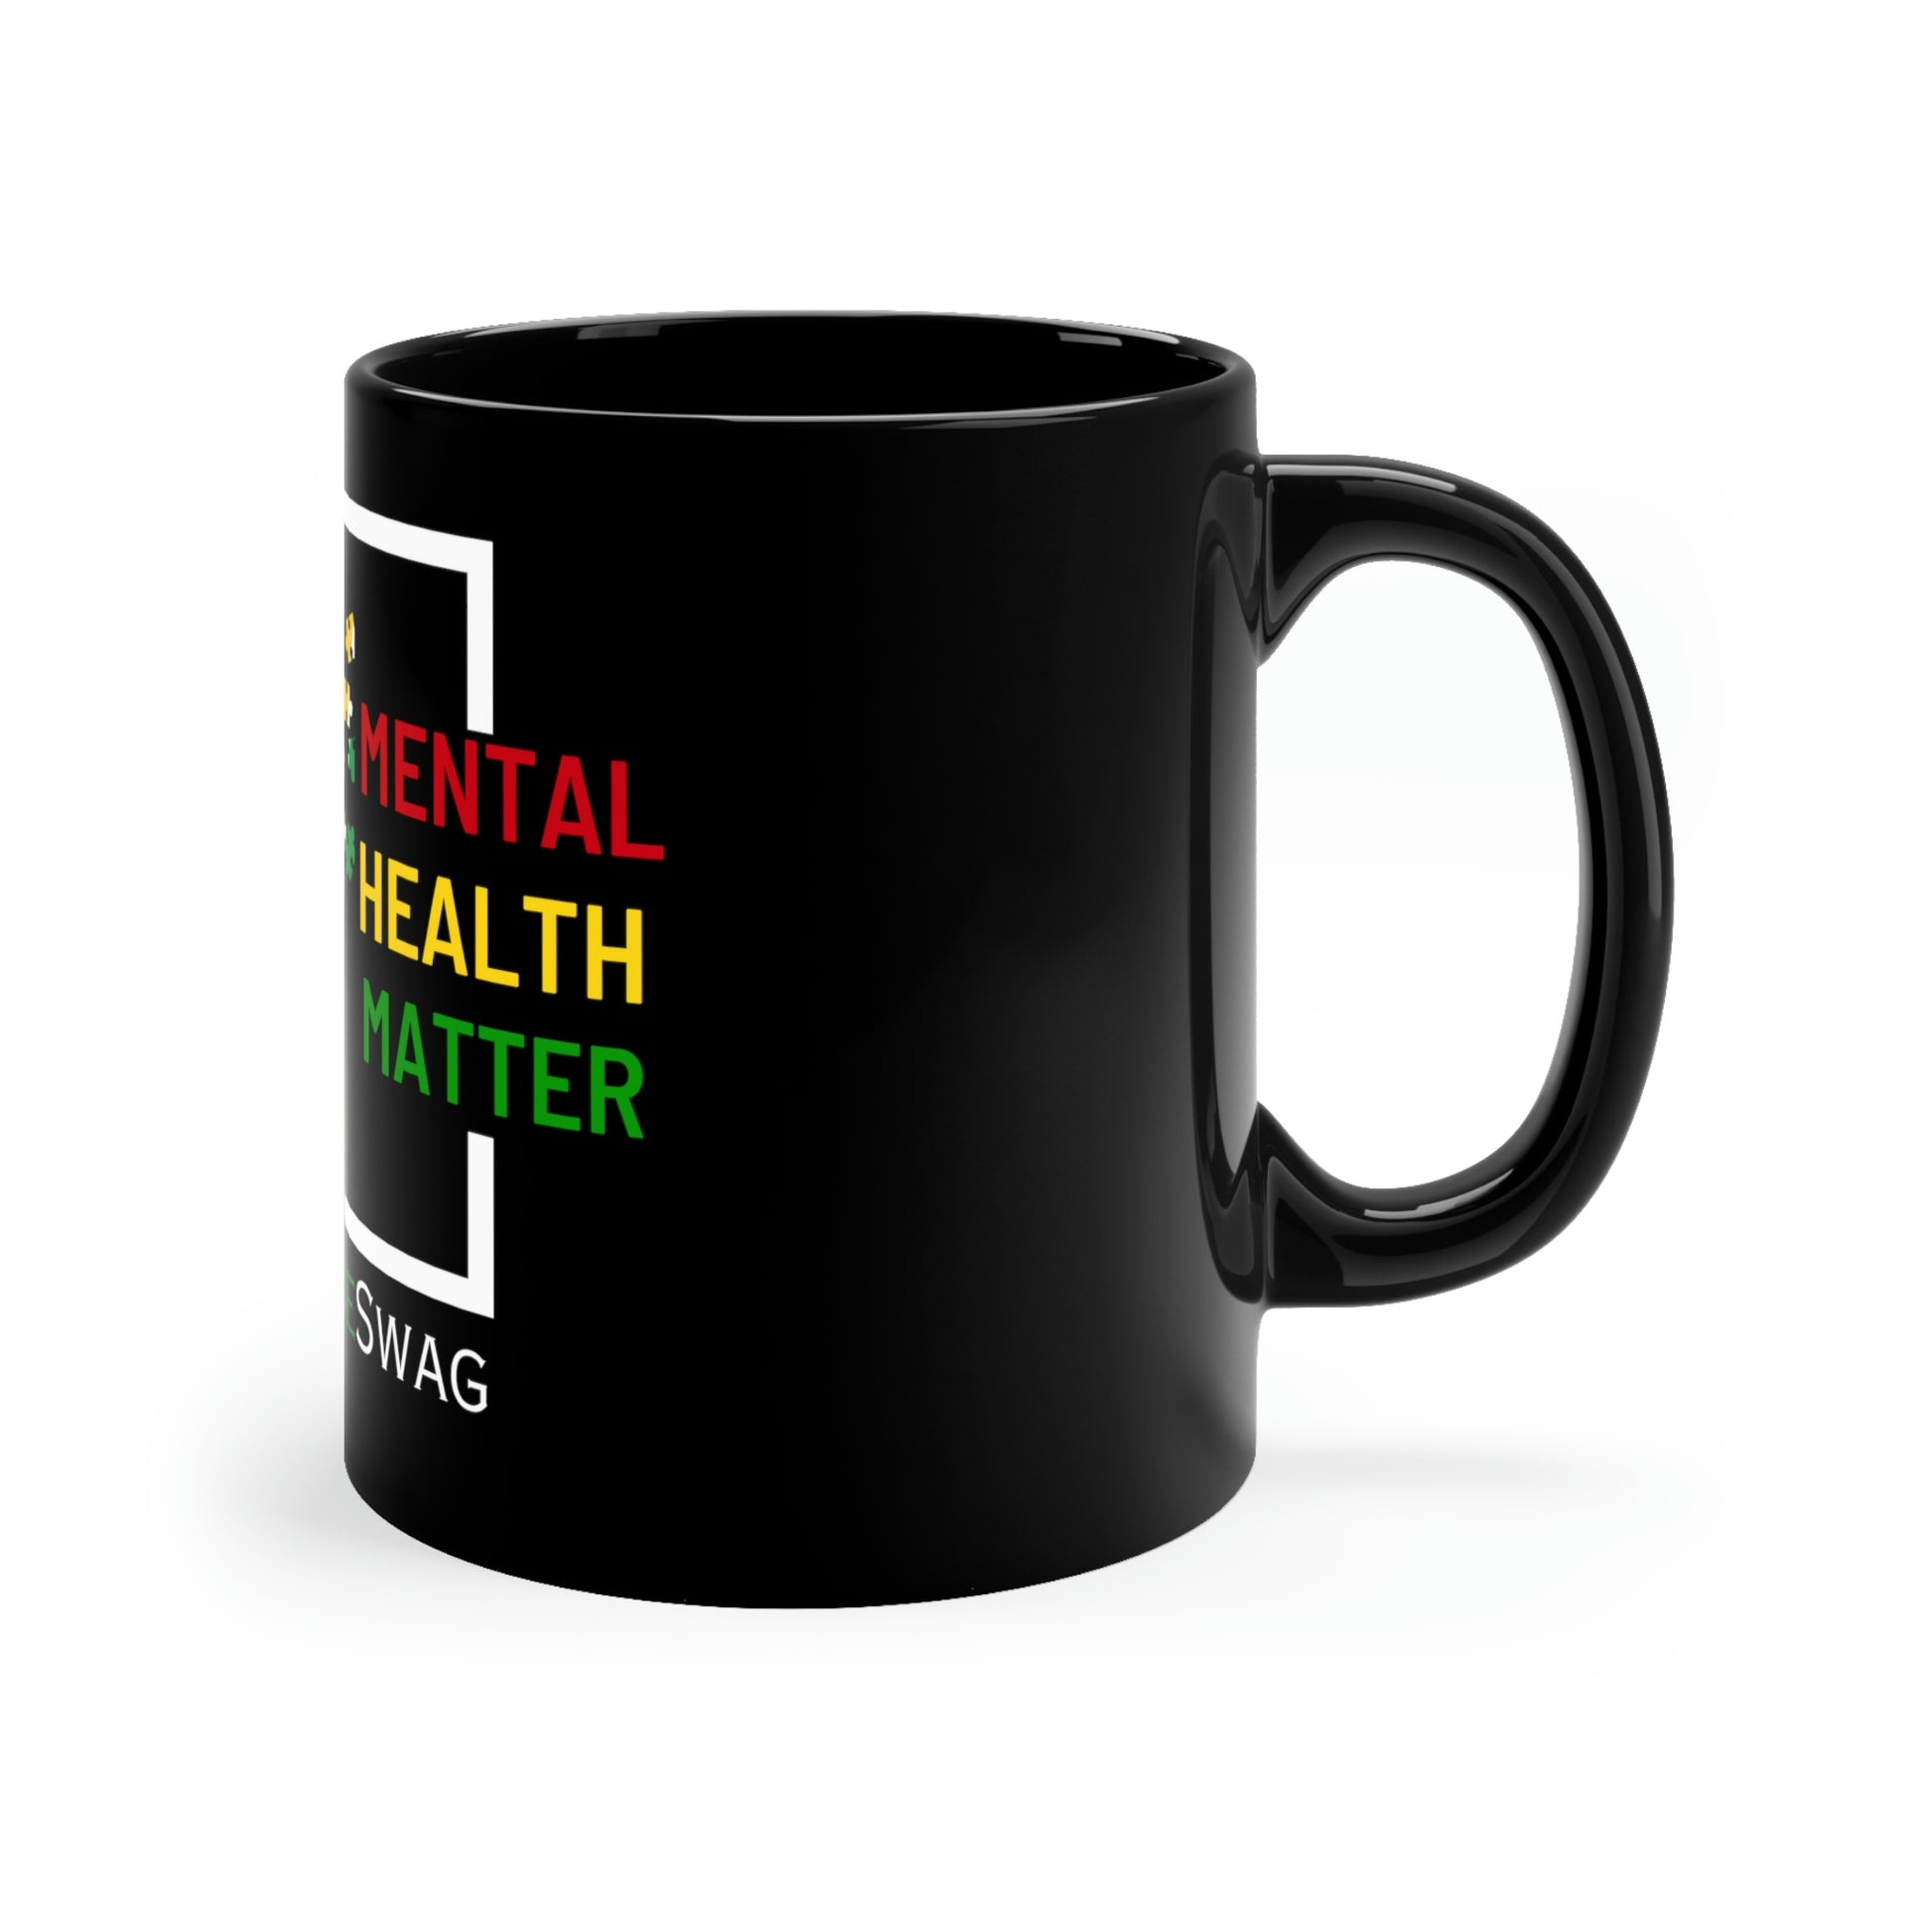 Guyanese Swag "Mental Health Matter" 11oz Black Mug.